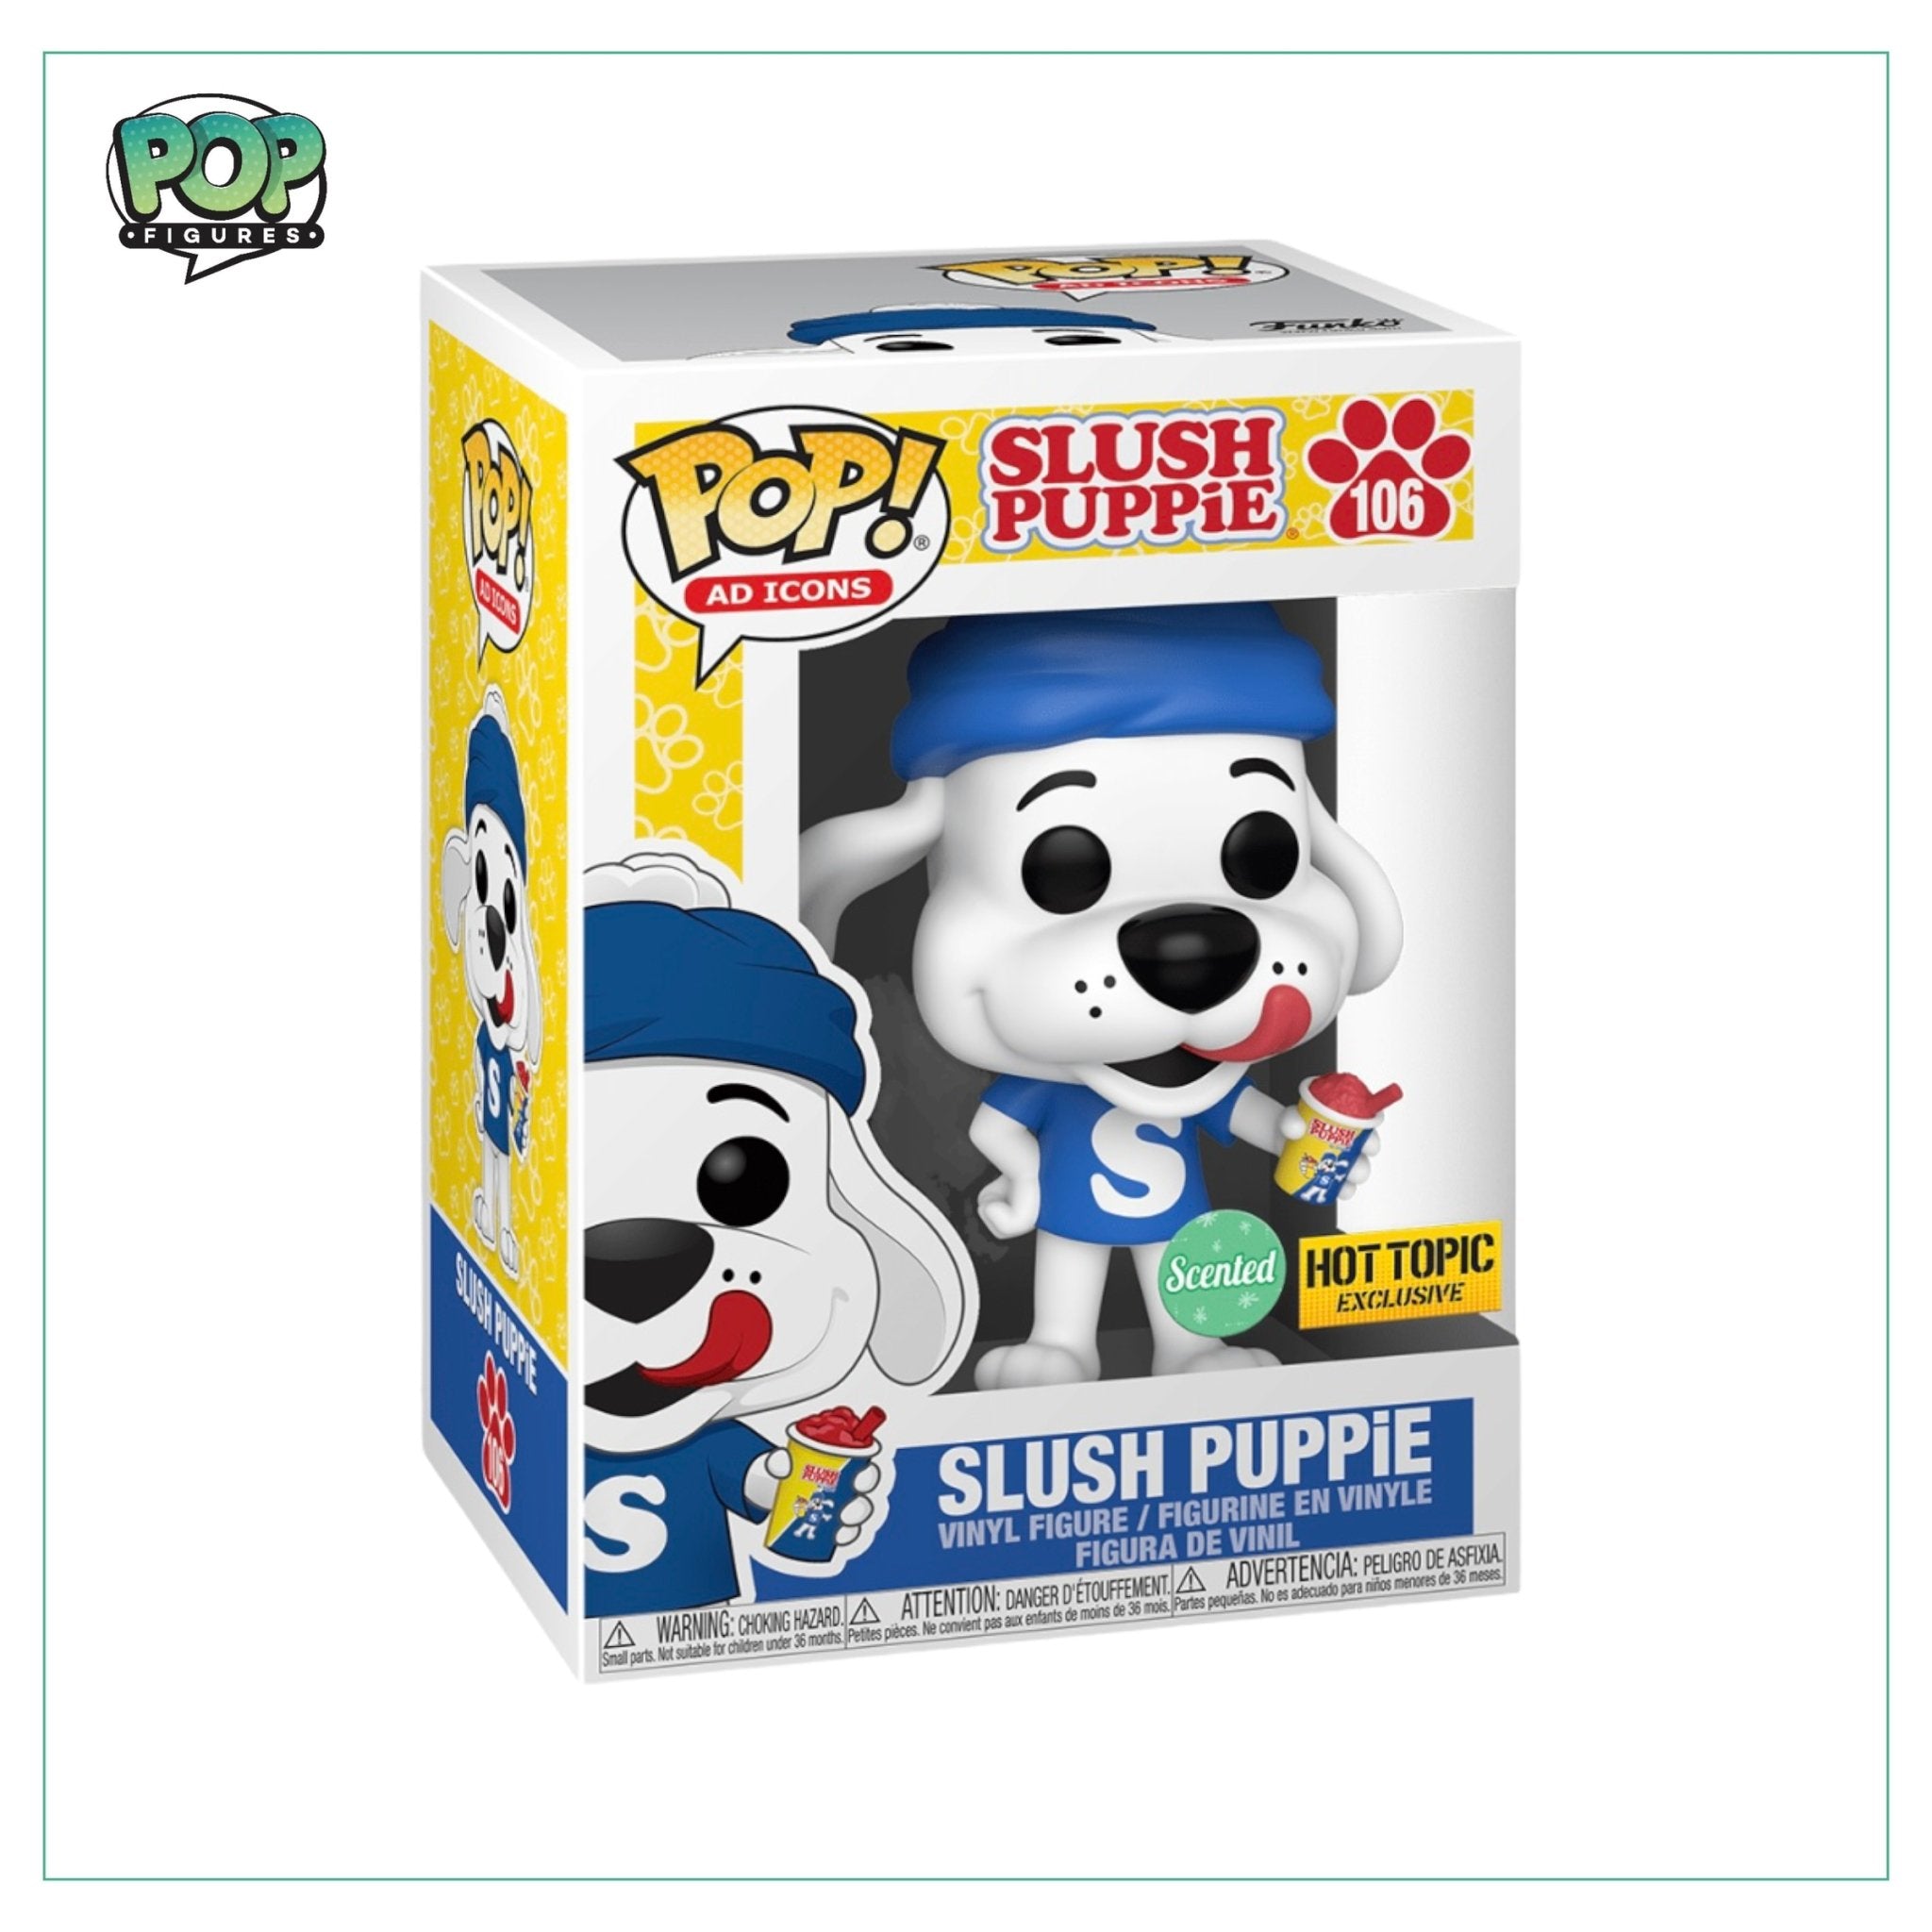 Slush Puppie (Scented) #106 Funko Pop! AD Icons - Hot Topic Exclusive